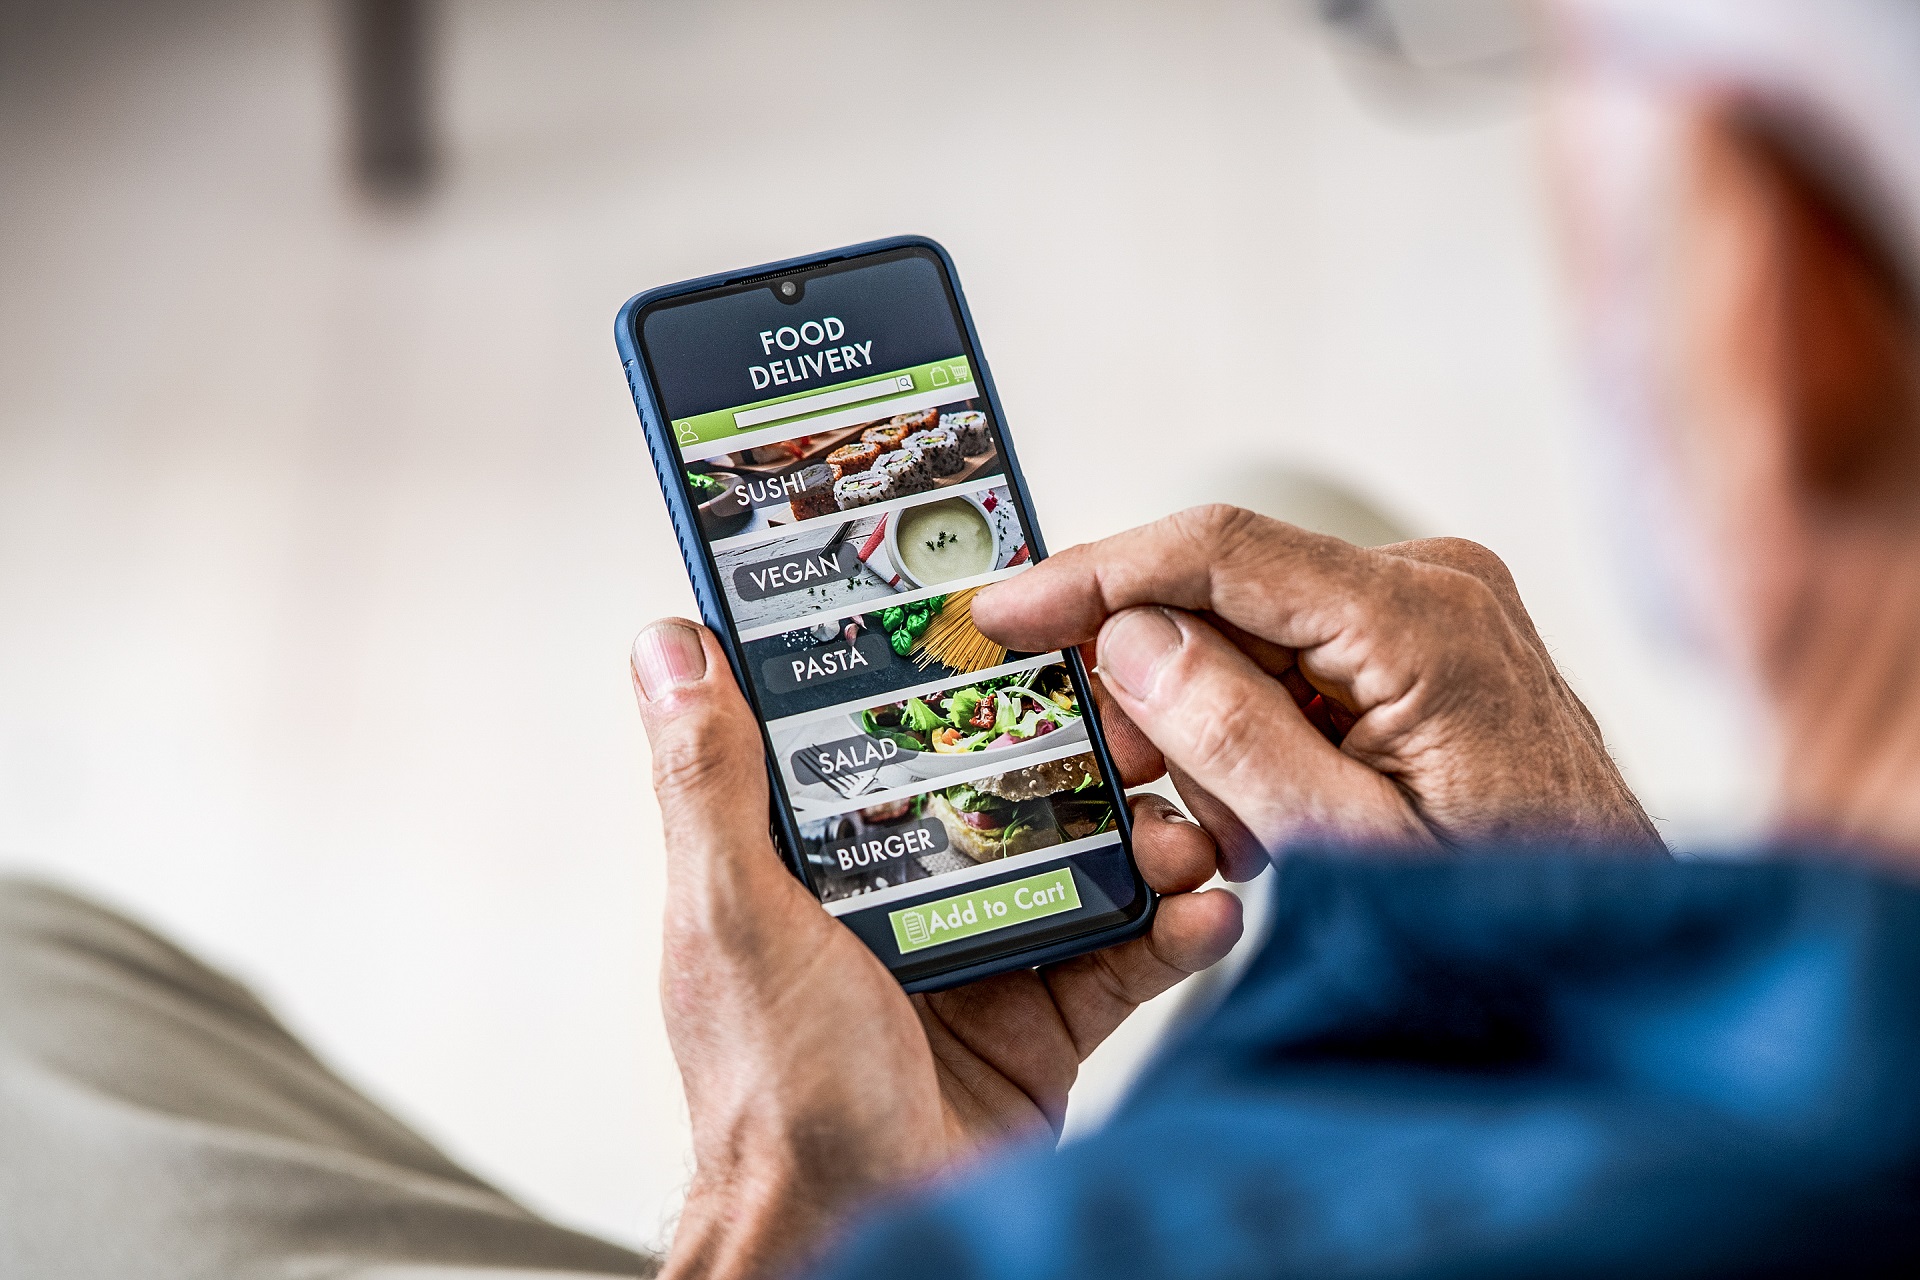 Can you order food via app?